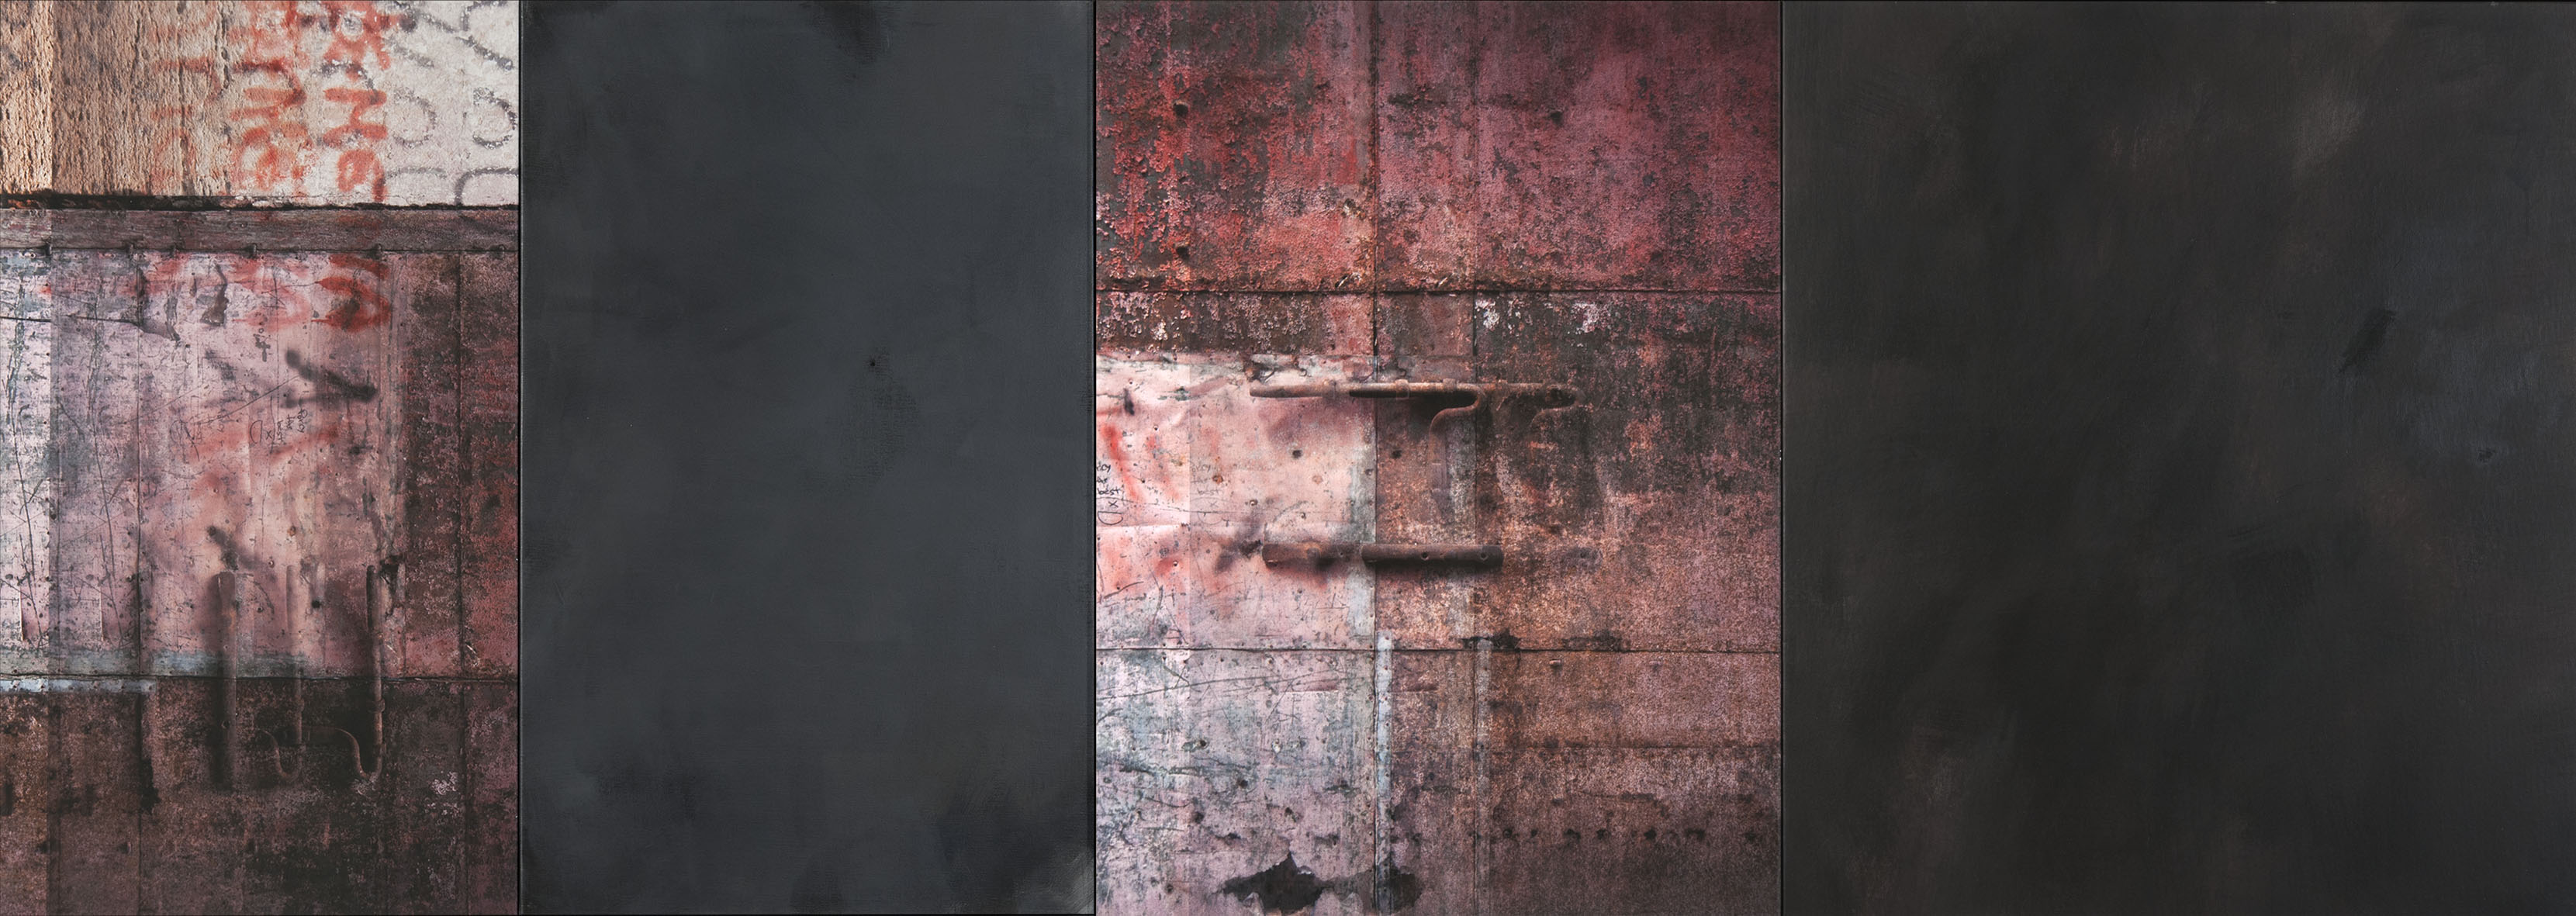 Claudia Peill, Storie, 2017, acrilico su tela e base fotografica, 80x225 cm